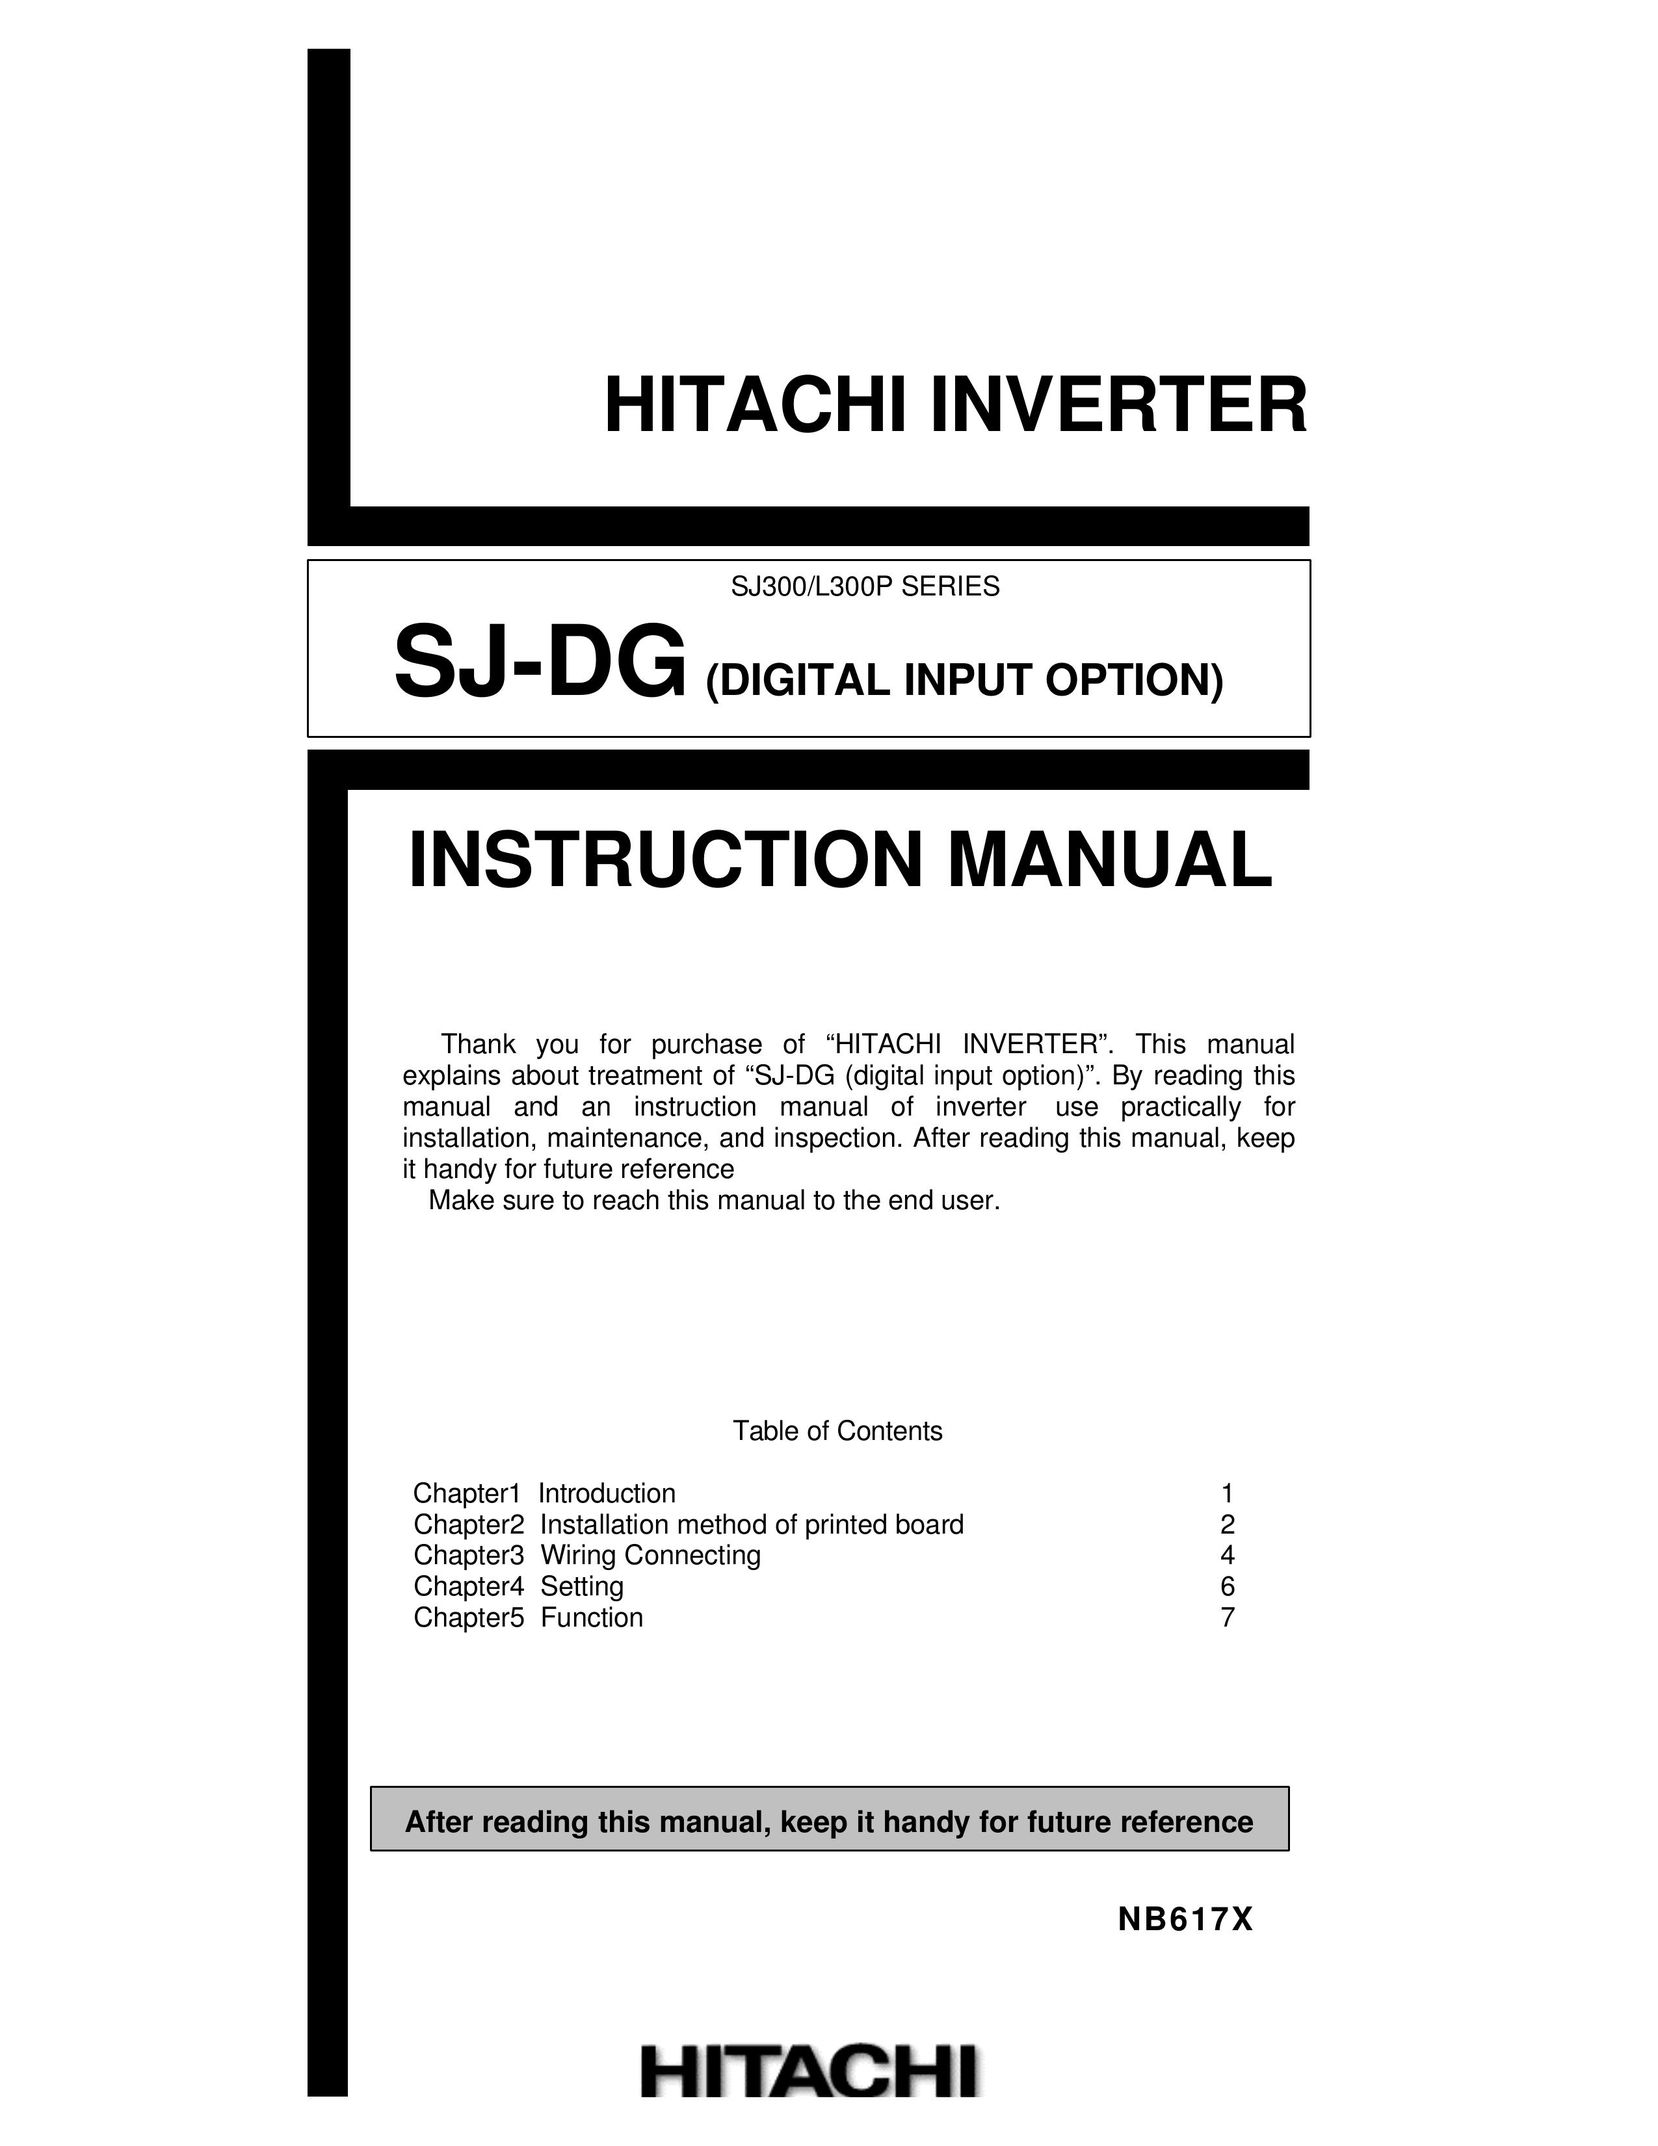 Hitachi SJ-DG Power Supply User Manual